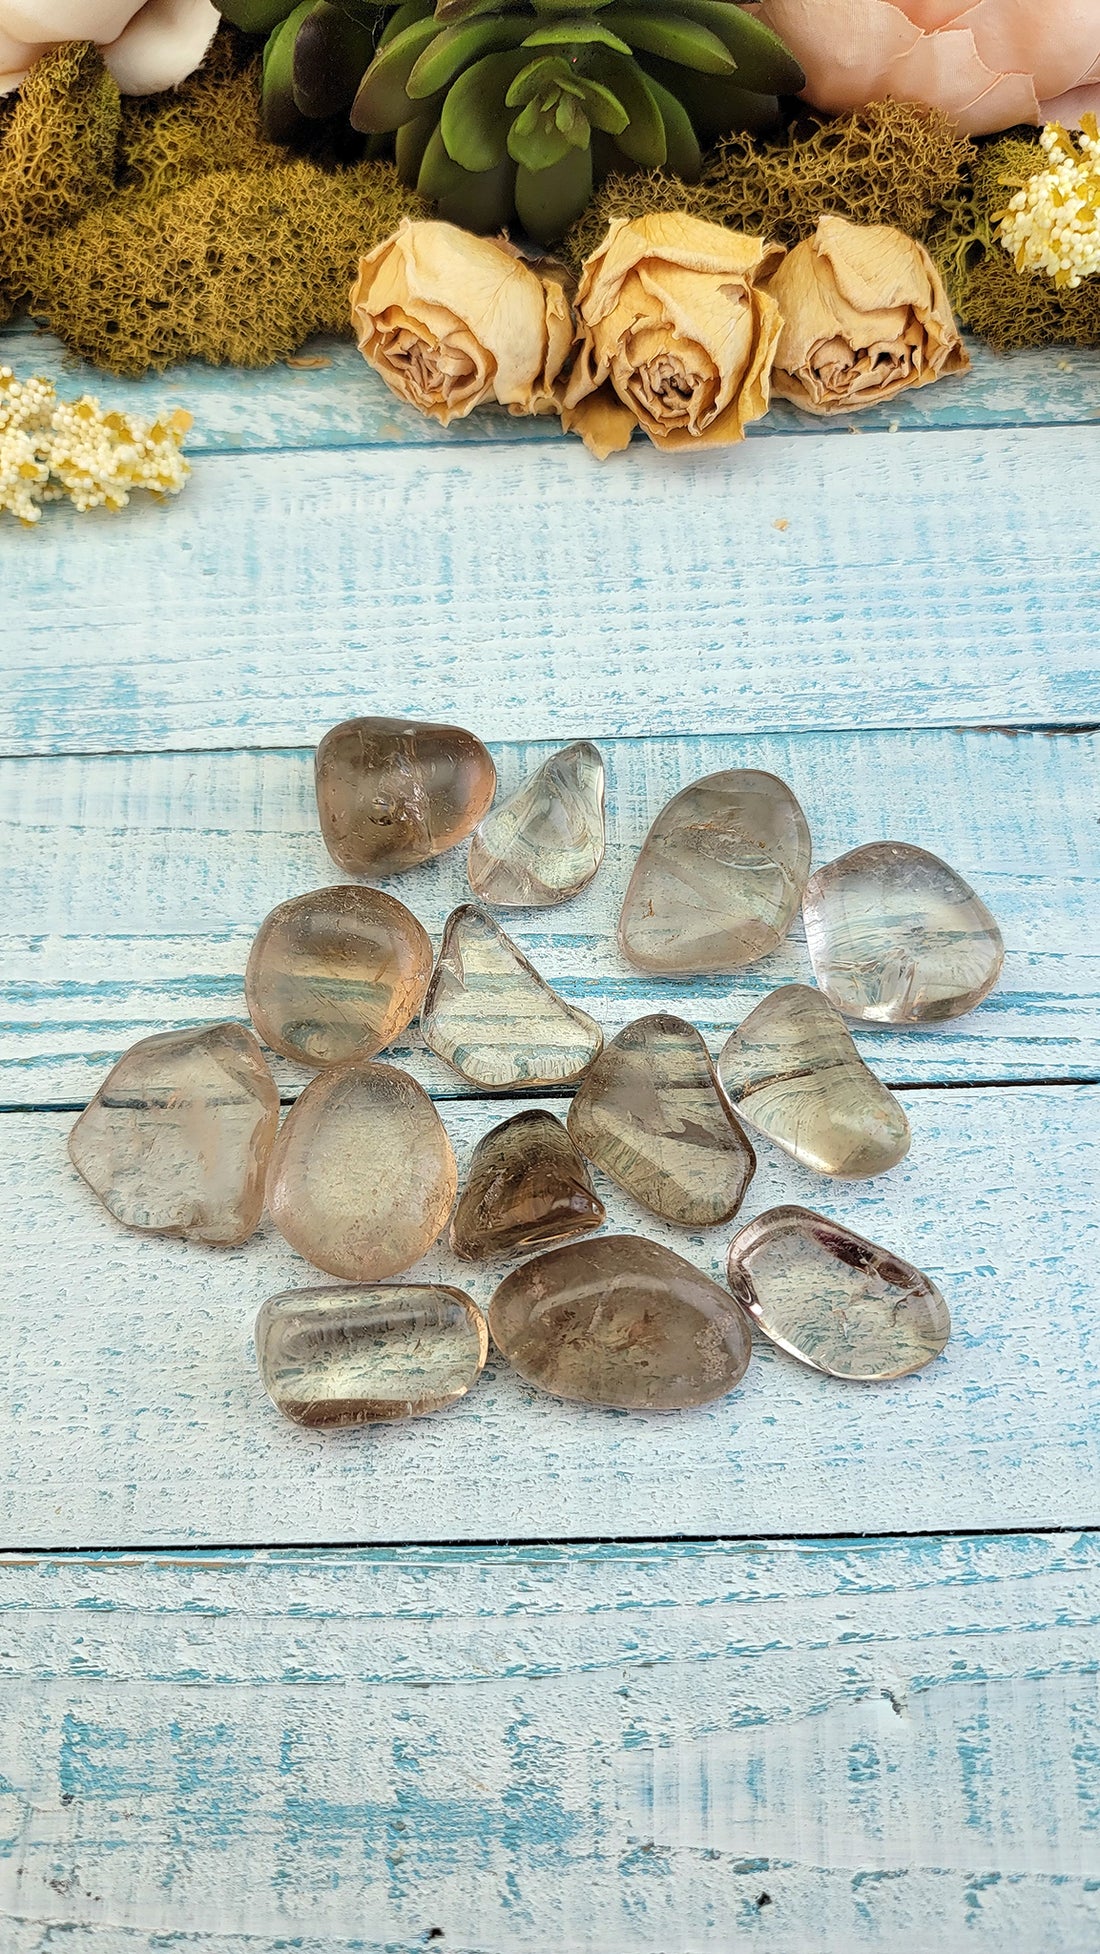 tumbled smoky quartz stones on display